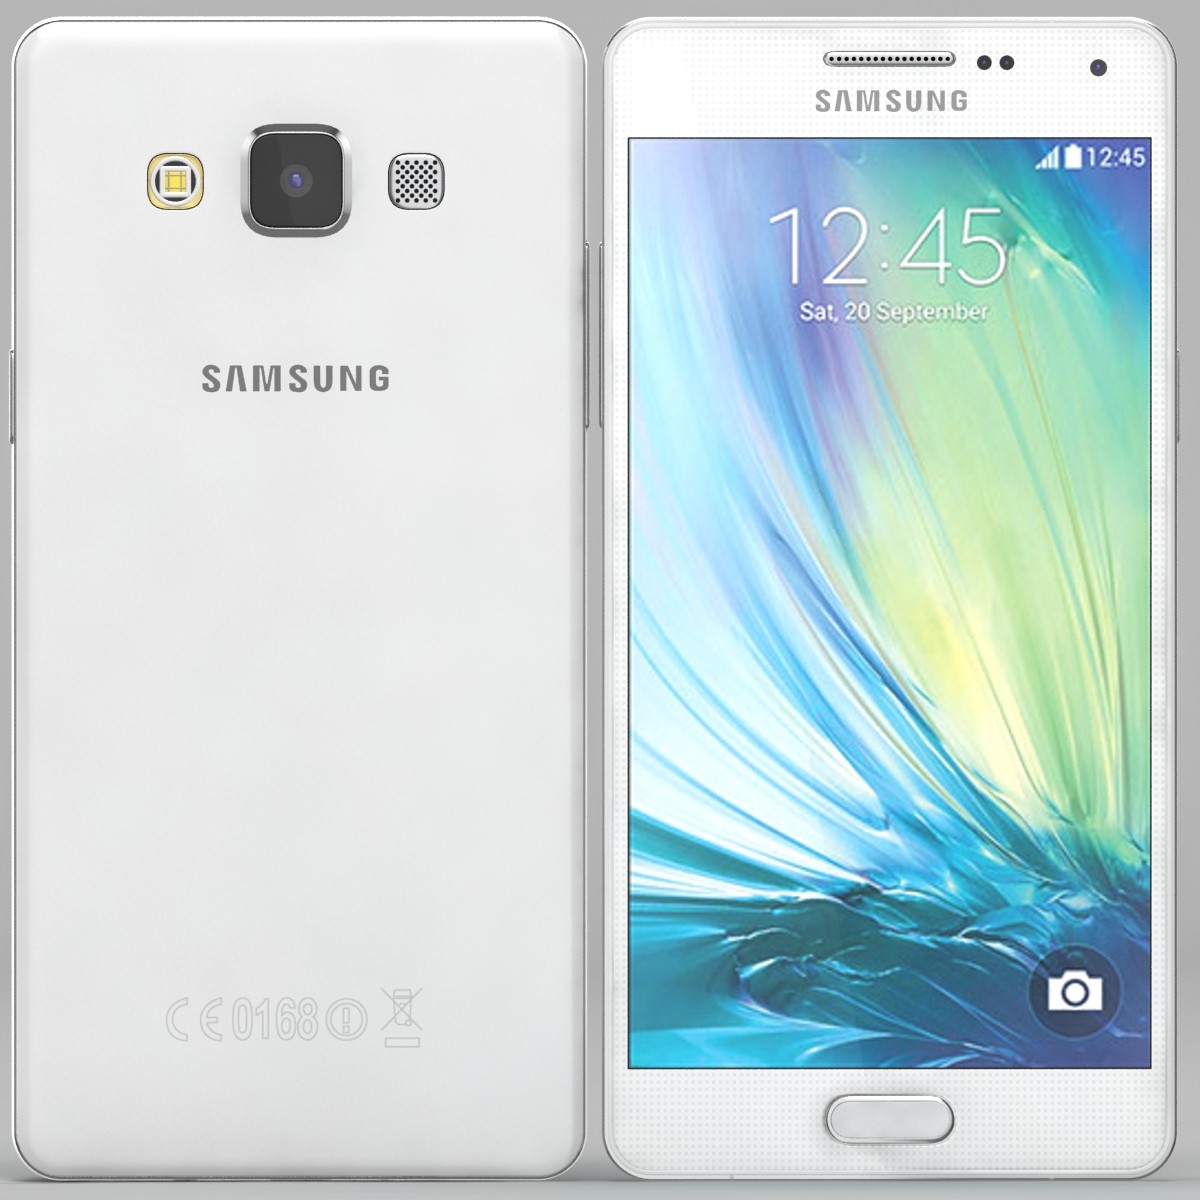 Самсунг 3 память. Samsung a5 2014. Samsung Galaxy a5 2015. Samsung Galaxy s5. Samsung Galaxy a5 a500f.